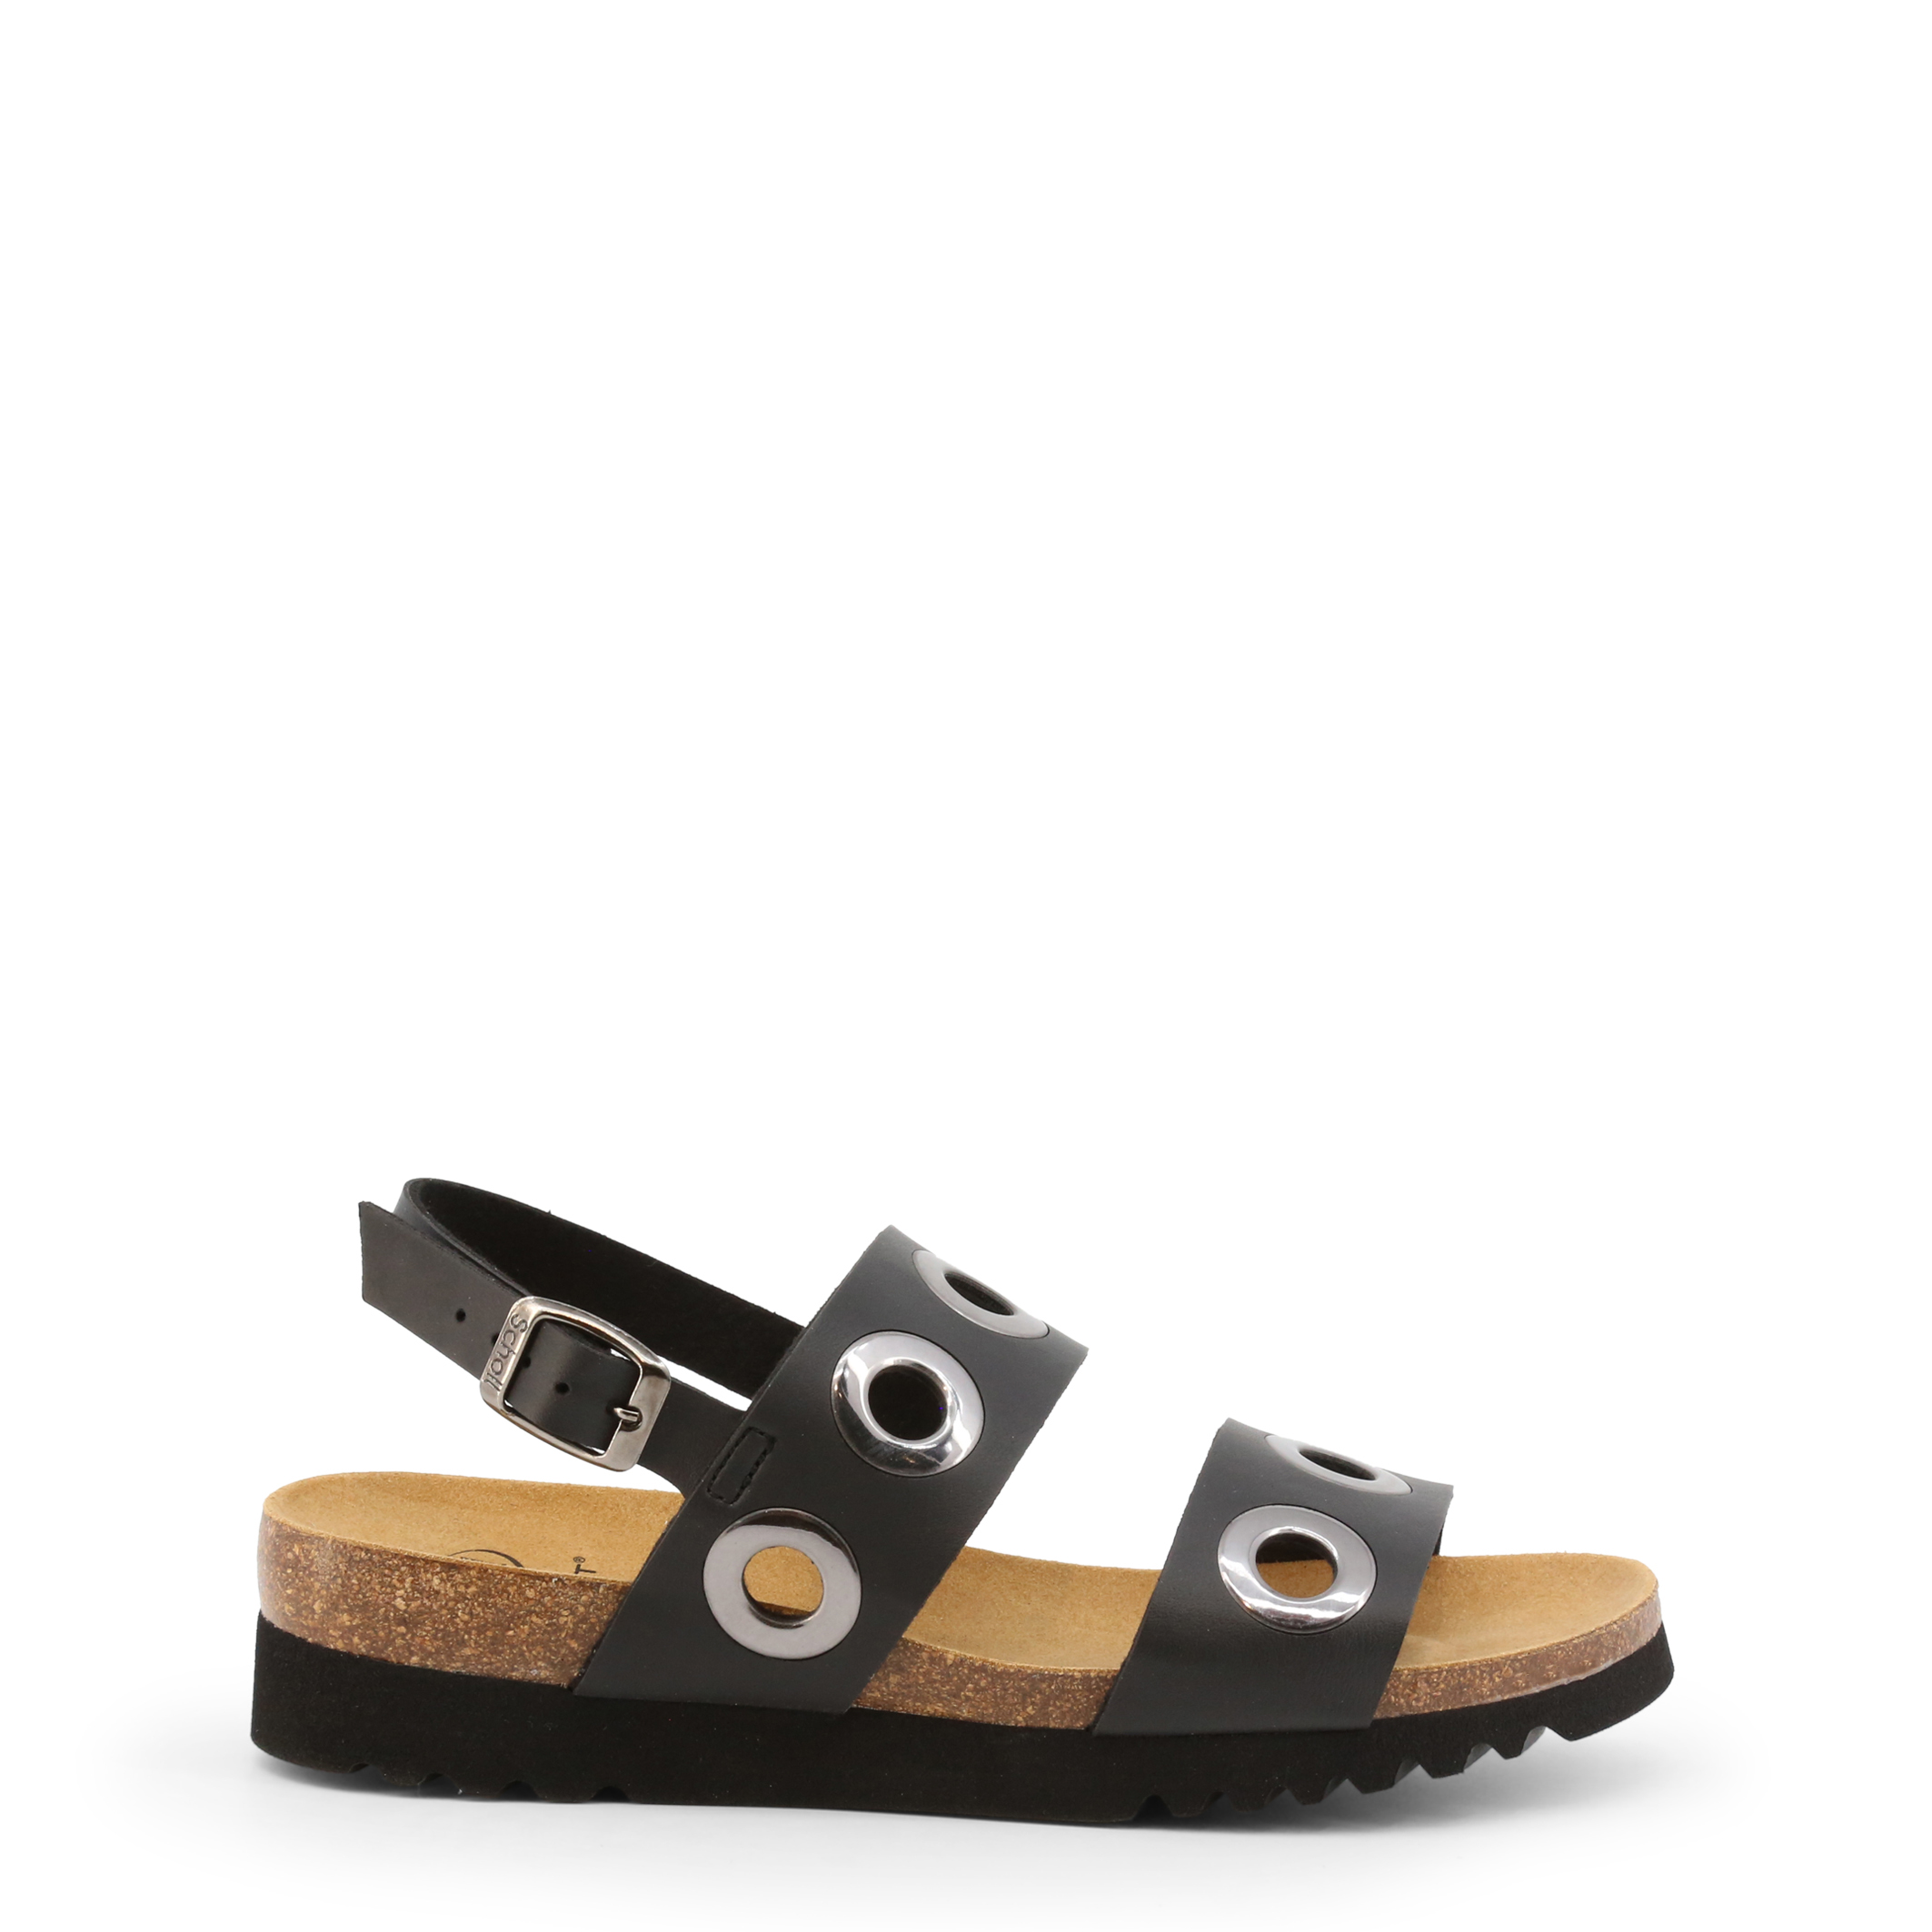 Dr Scholl Black Sandals for Women - LARA-F27788